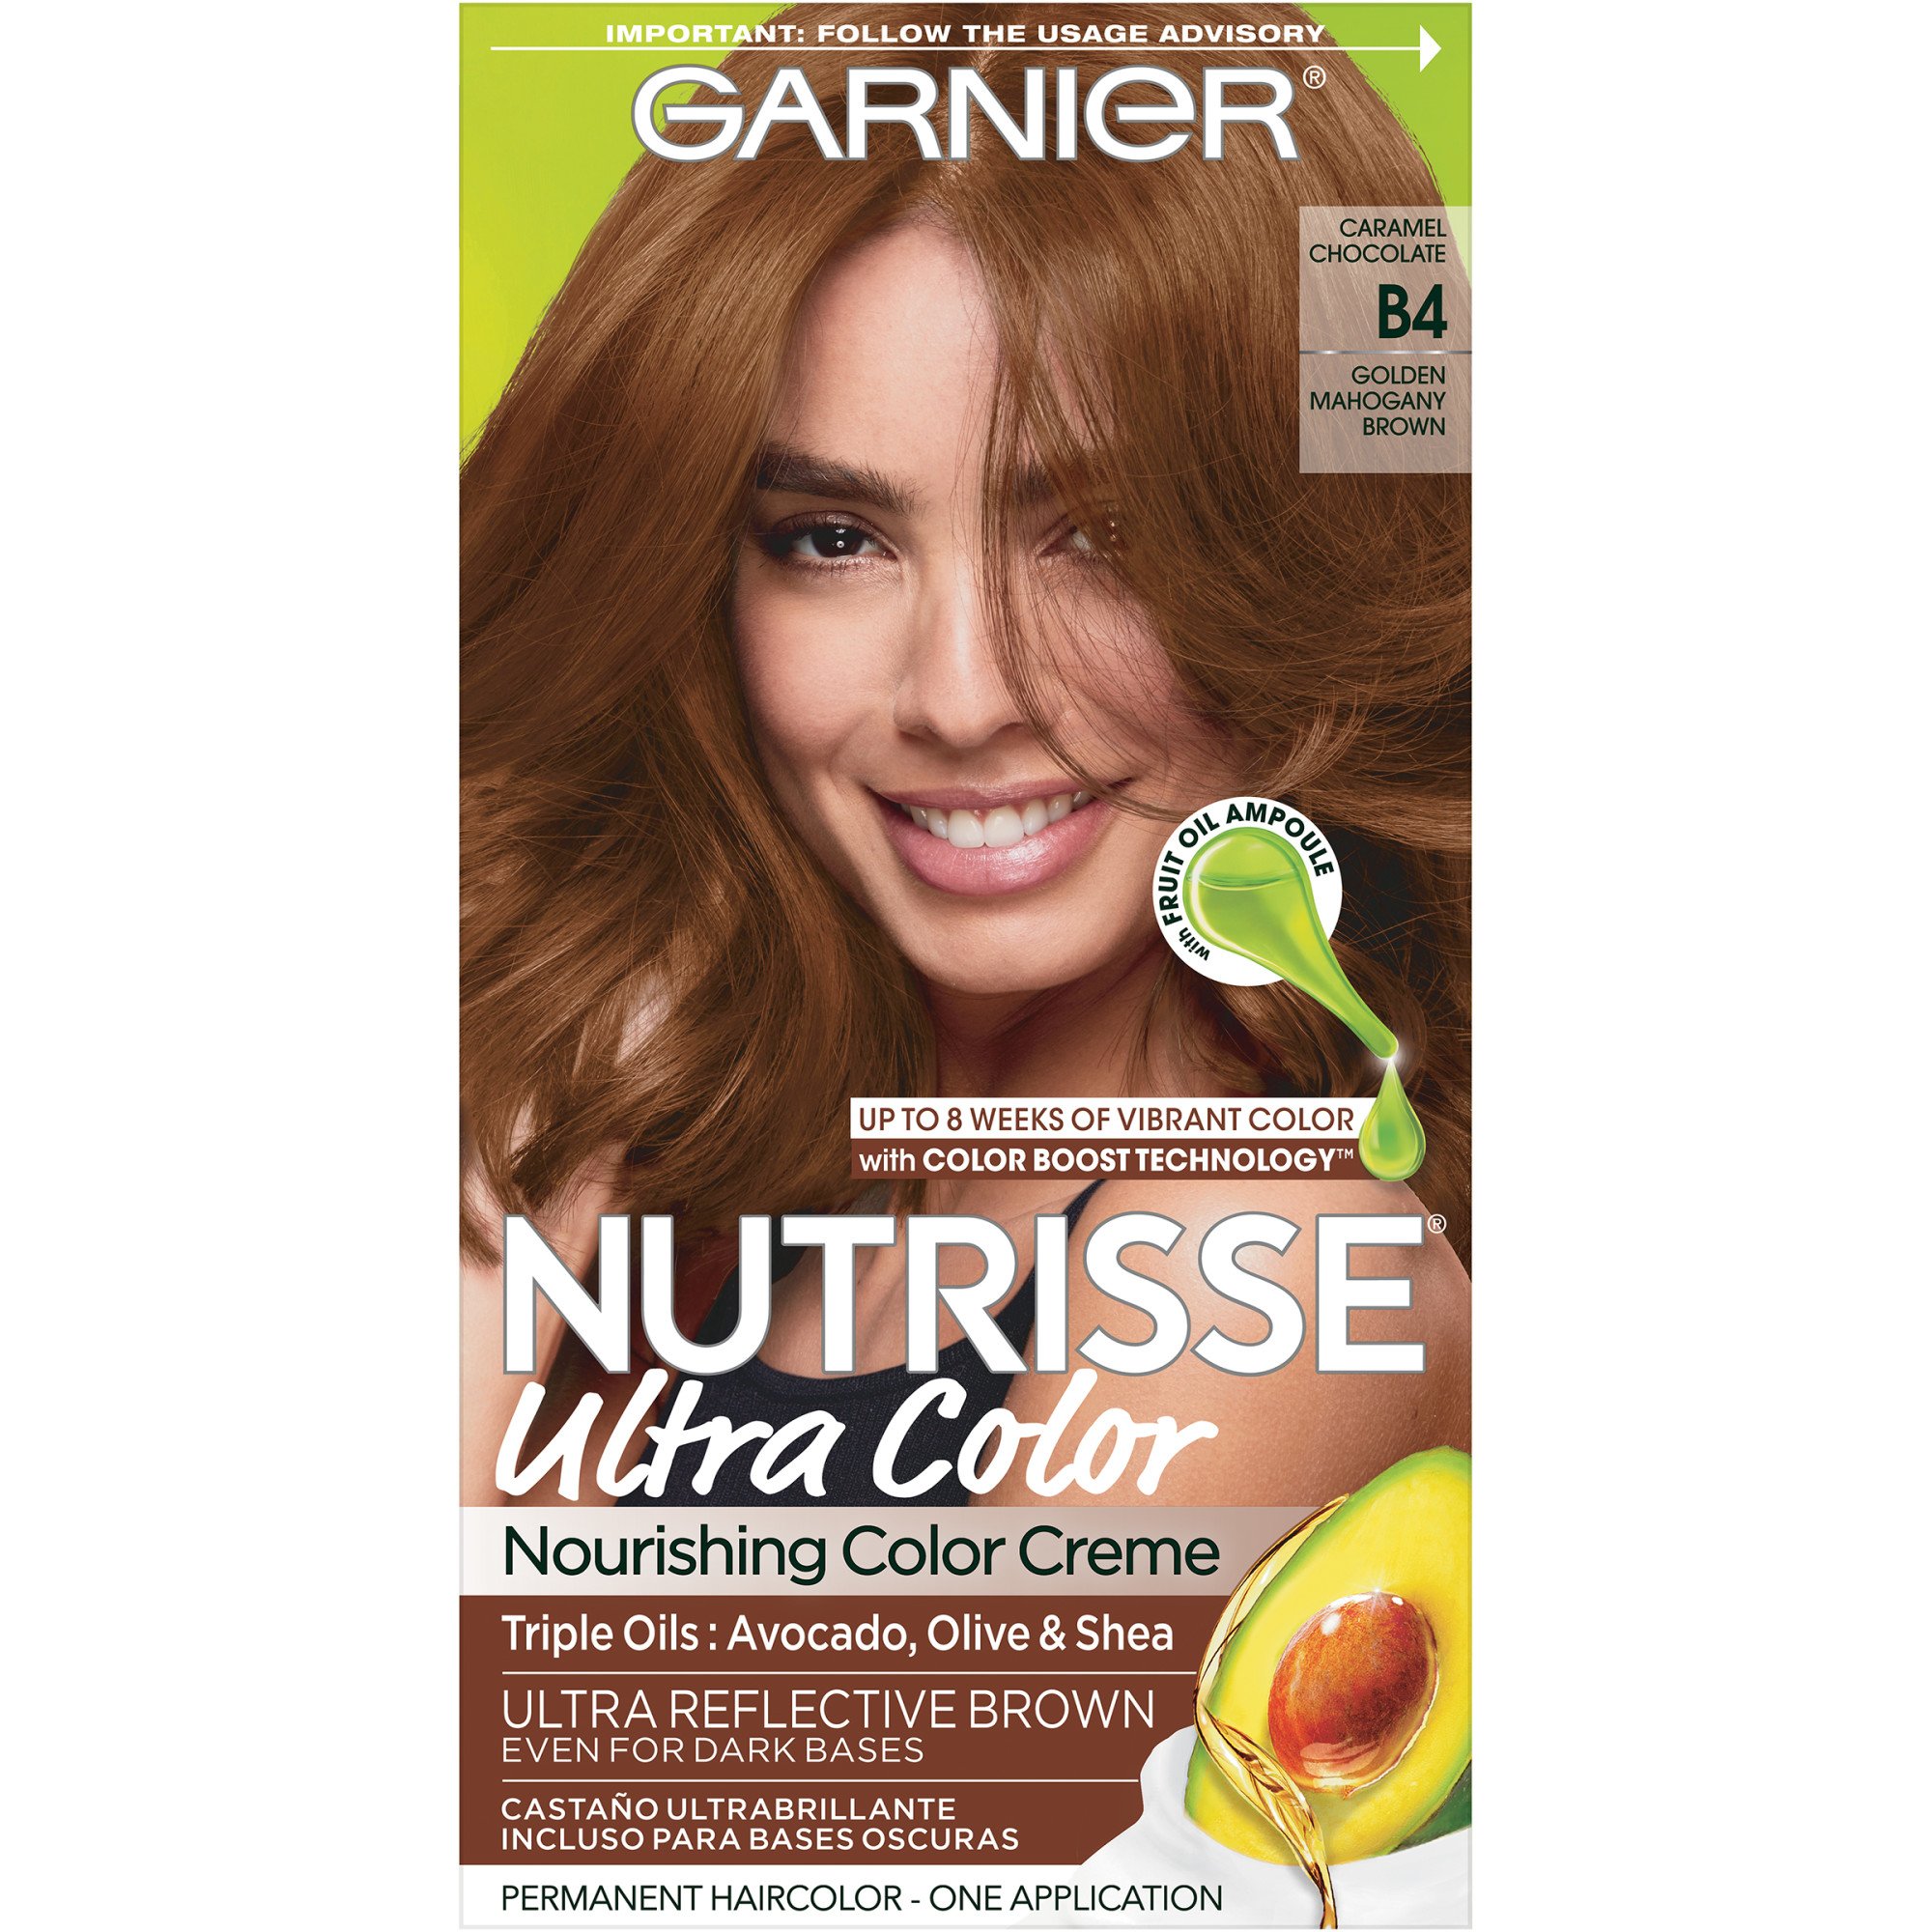 Garnier Nutrisse Ultra Color Nourishing Hair Color Creme B4